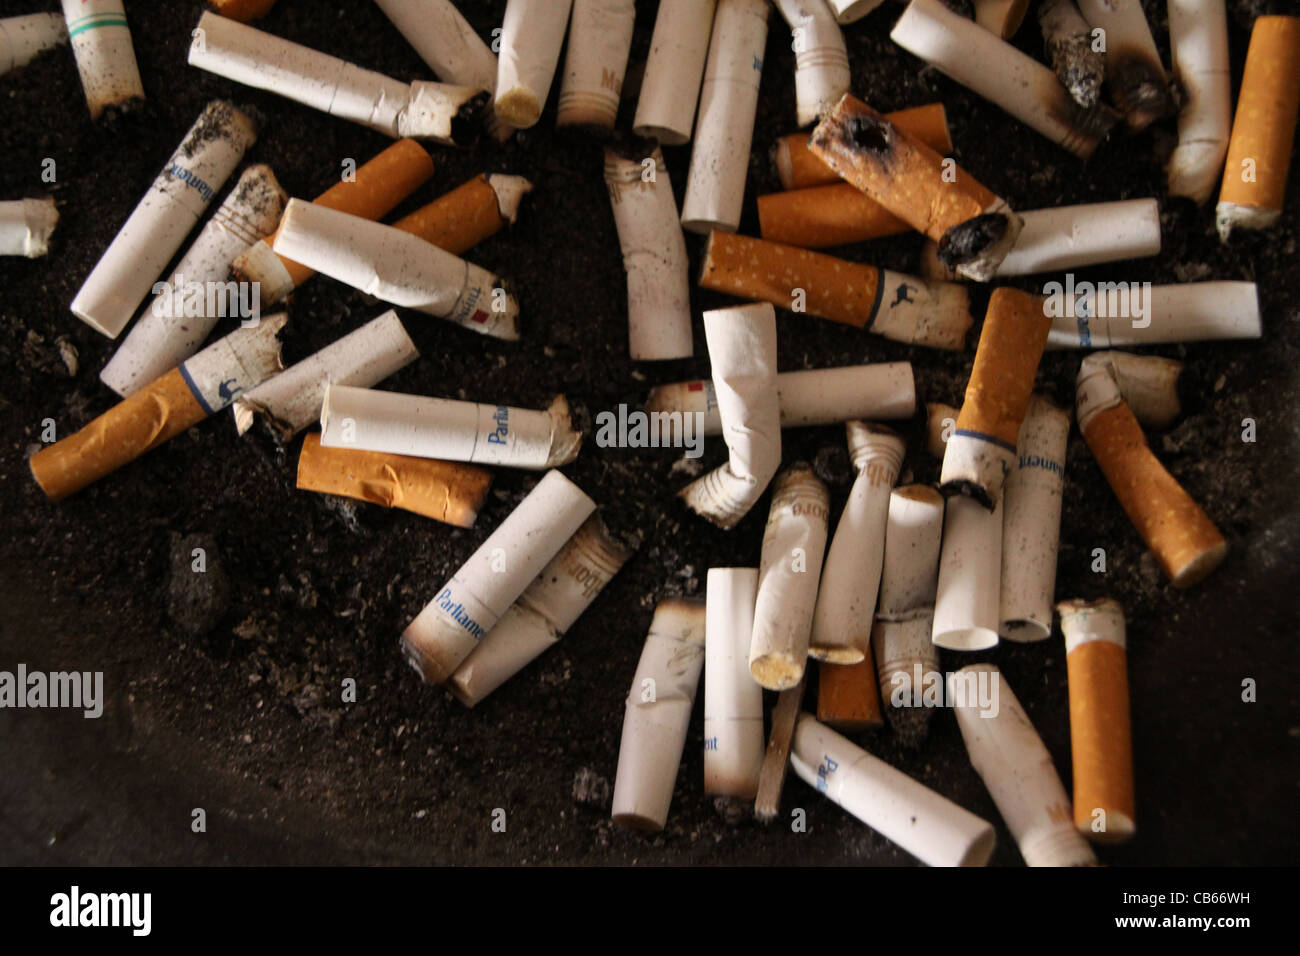 Cigarette butts in ashtray. Stock Photo